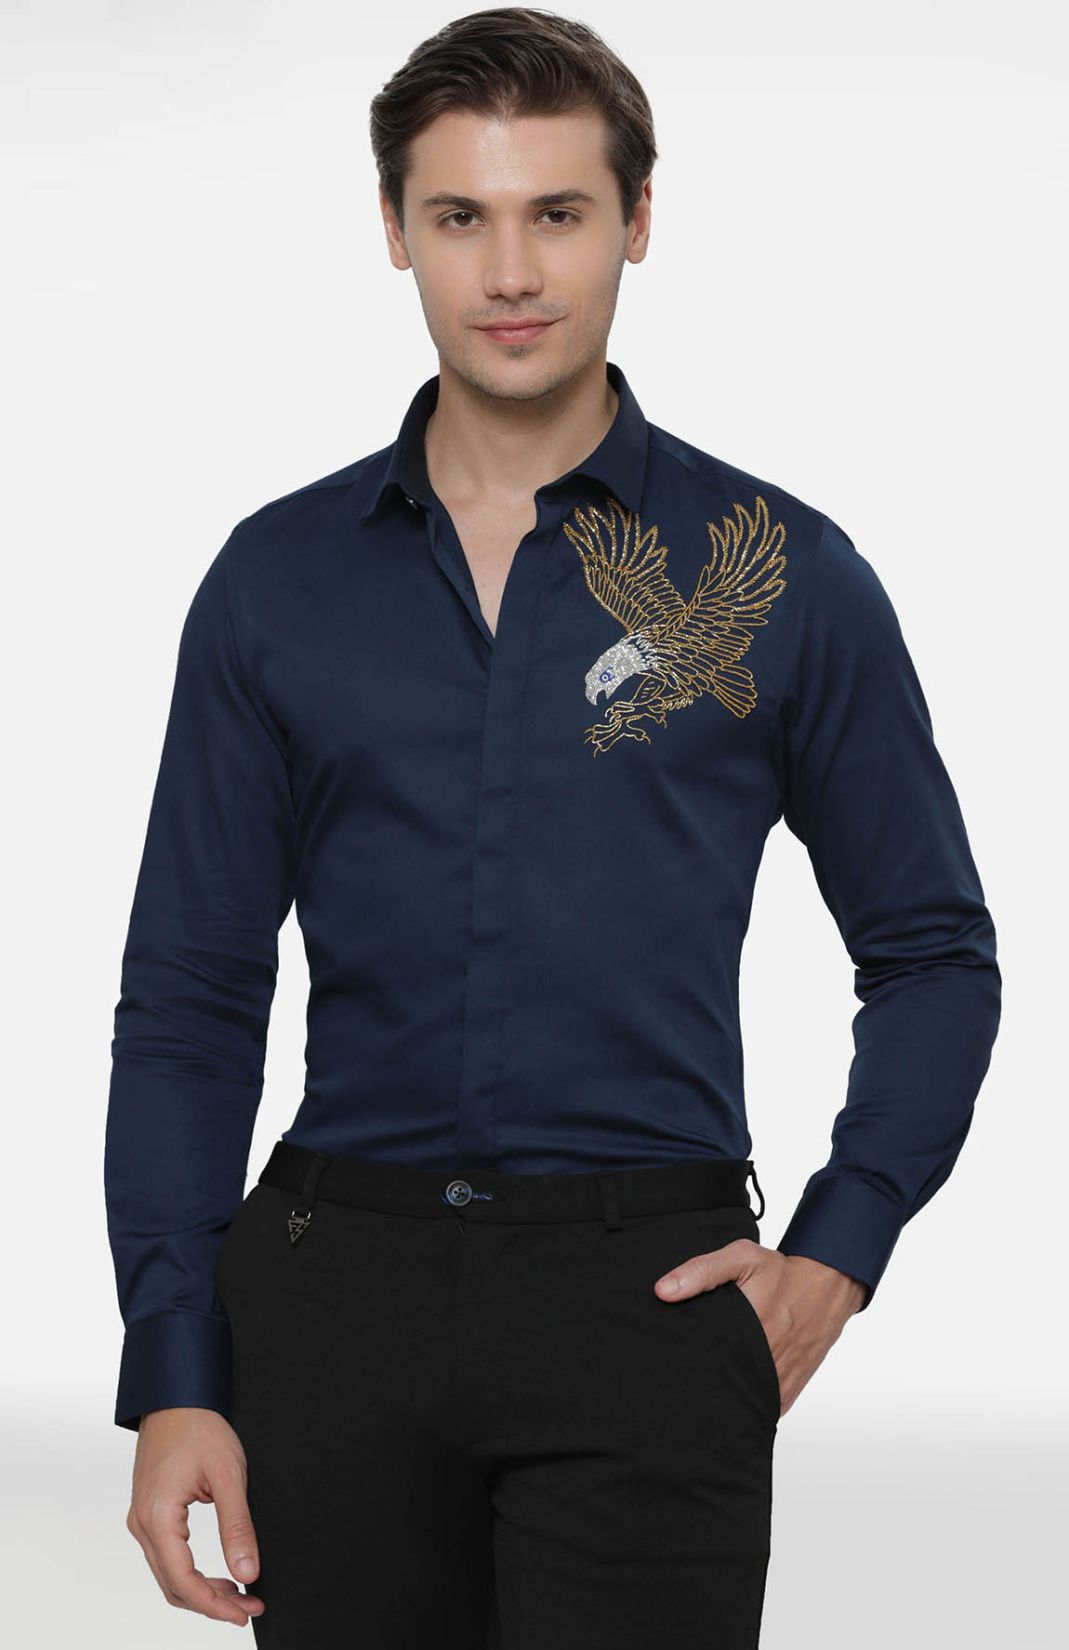 The Eagle Shirt